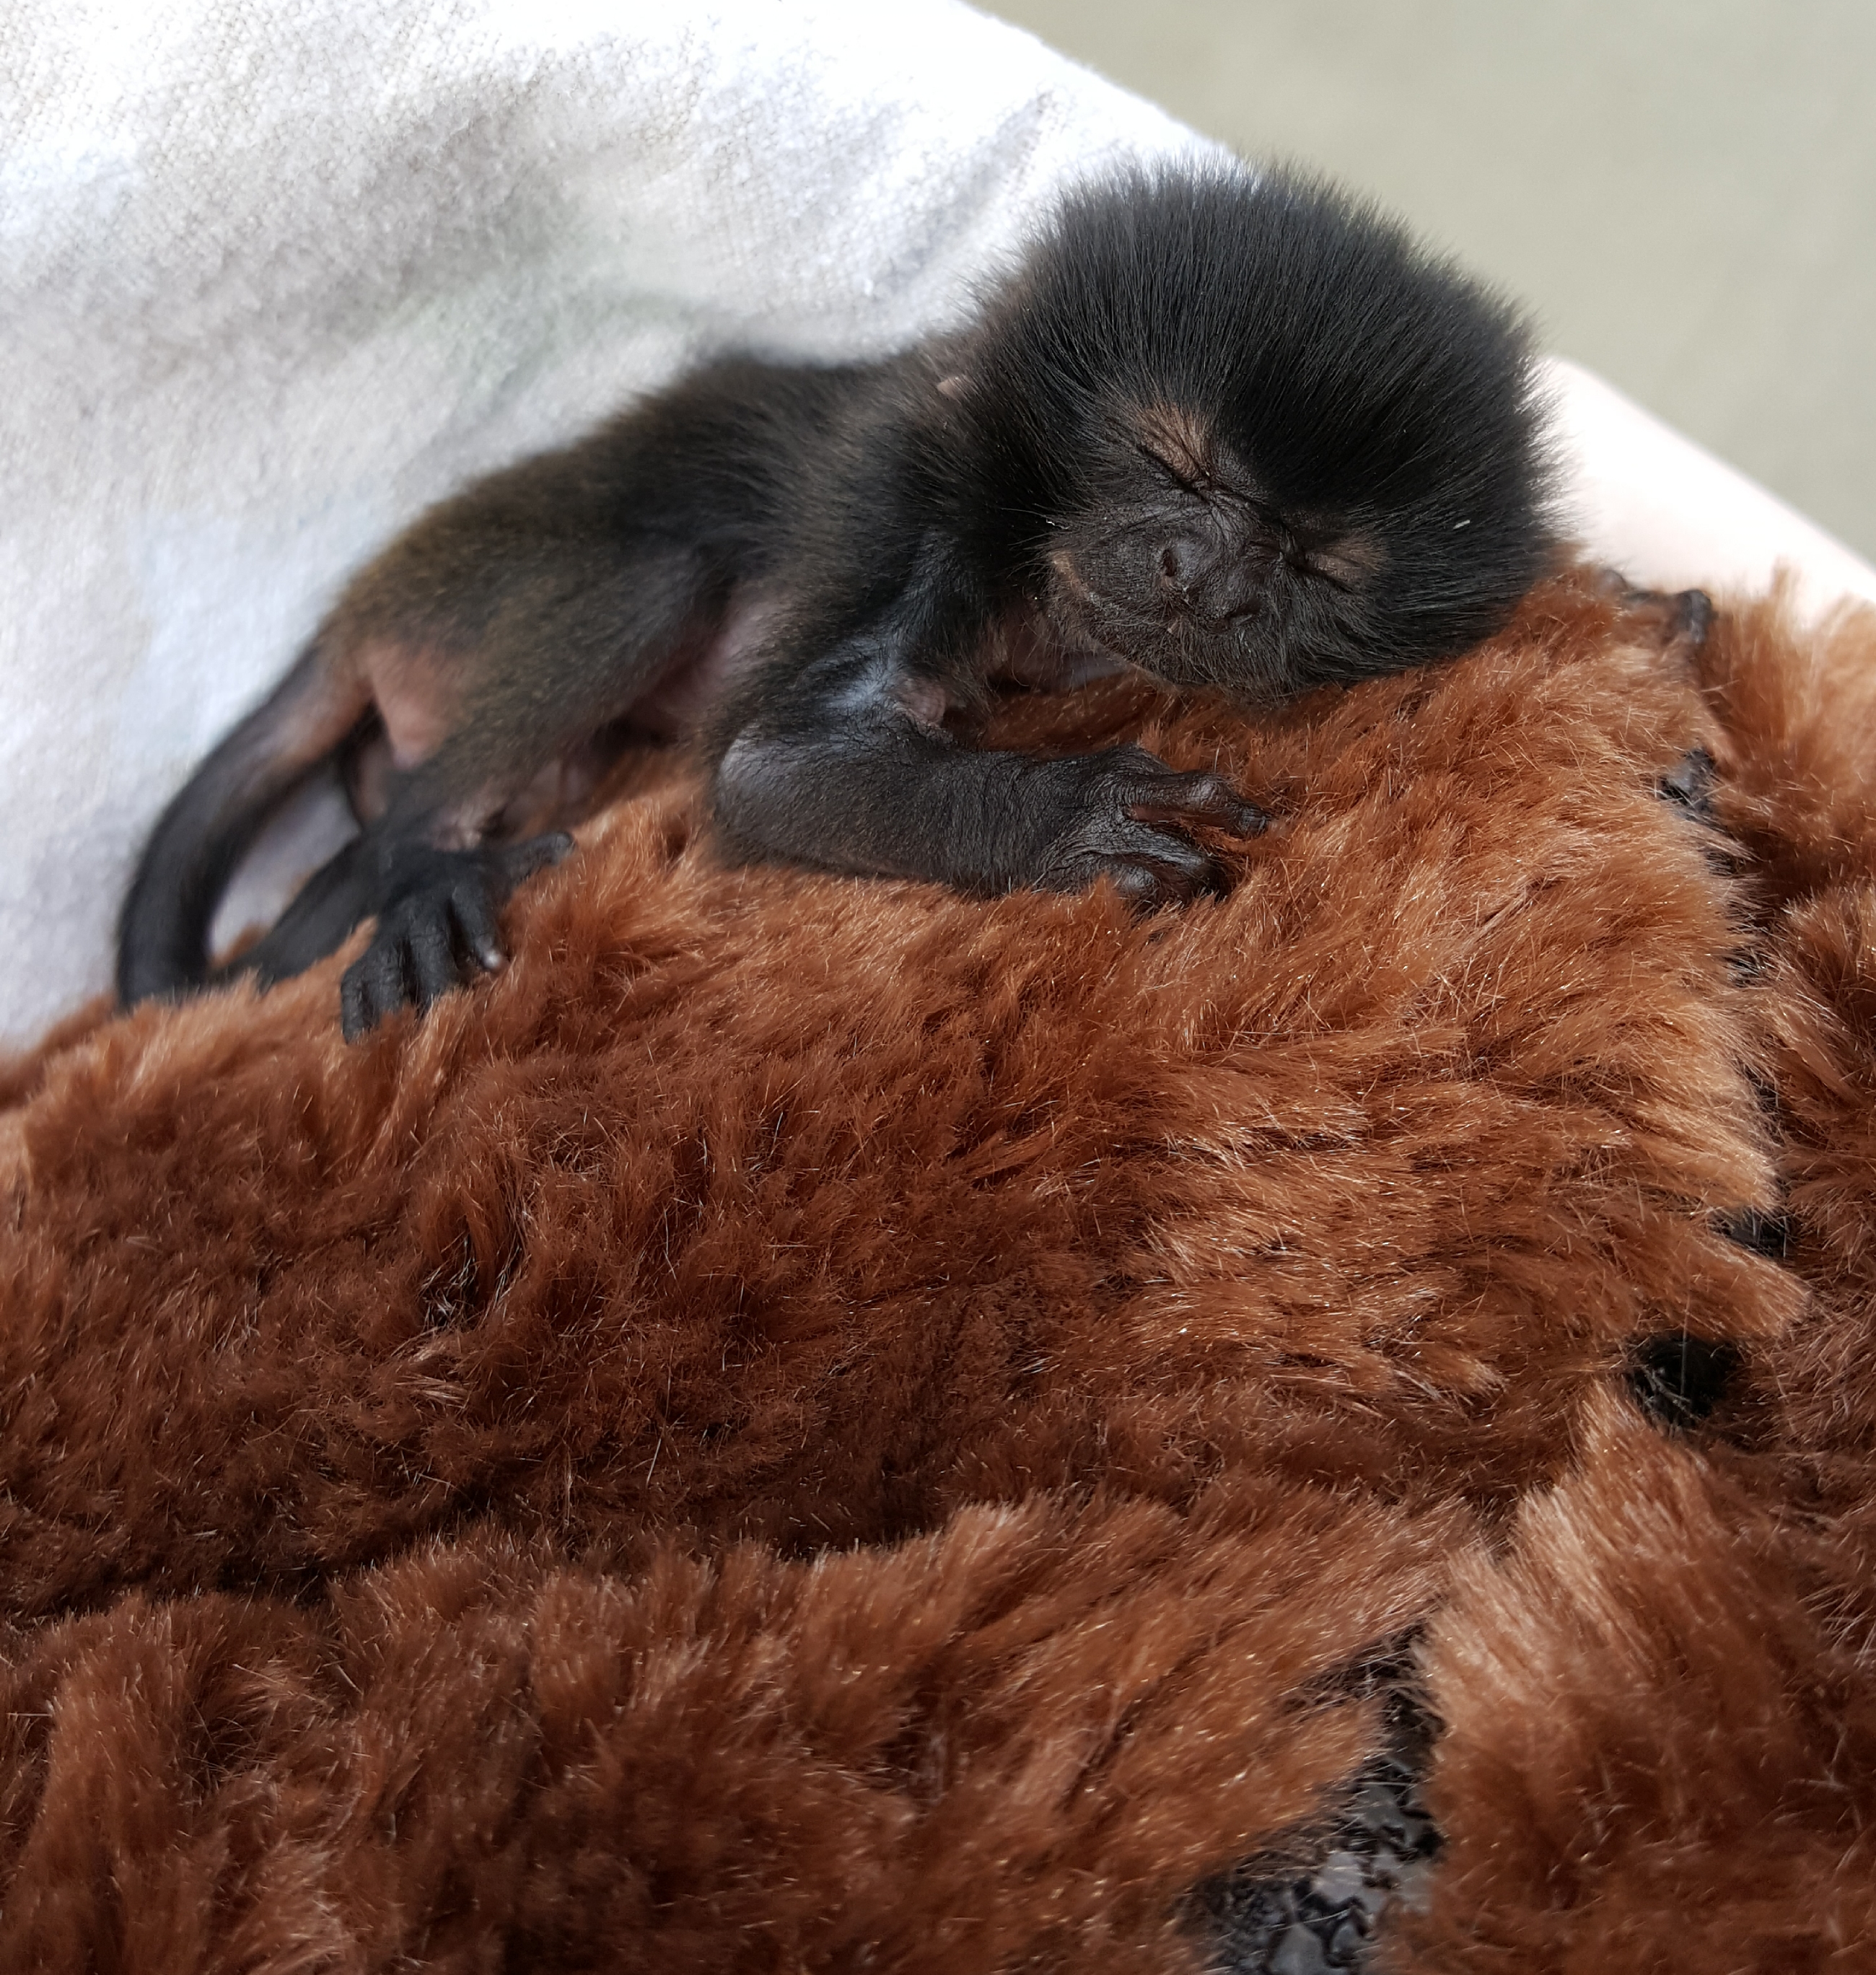 A Tiny Monkey with a Big Story - The Houston Zoo